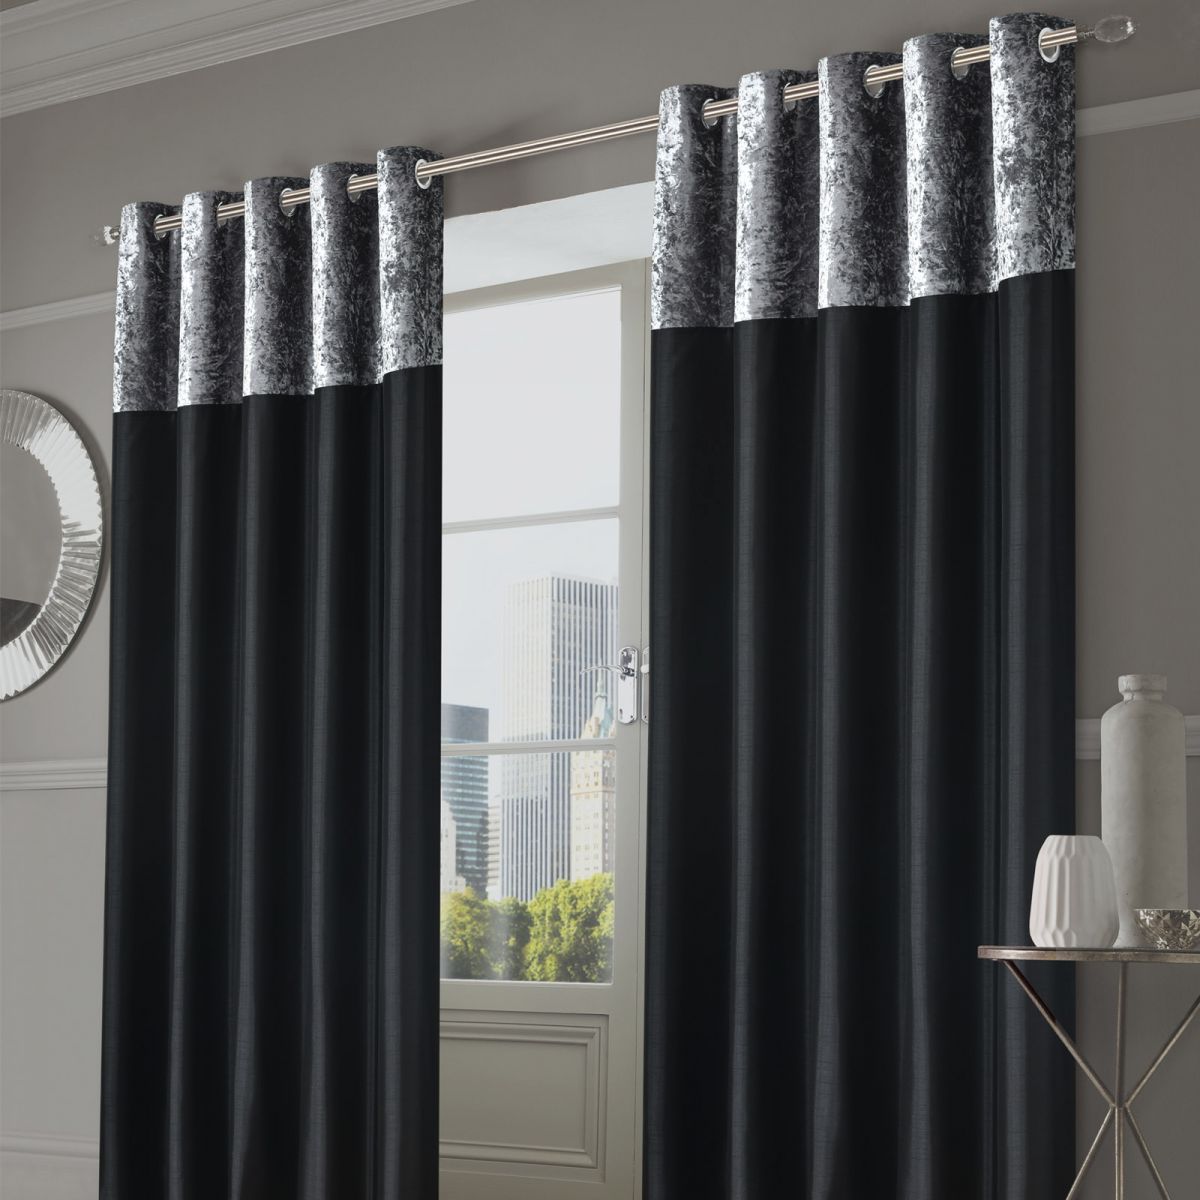 Sienna Home Manhattan Crushed Velvet Band Eyelet Curtains - Black, 66" x 90"